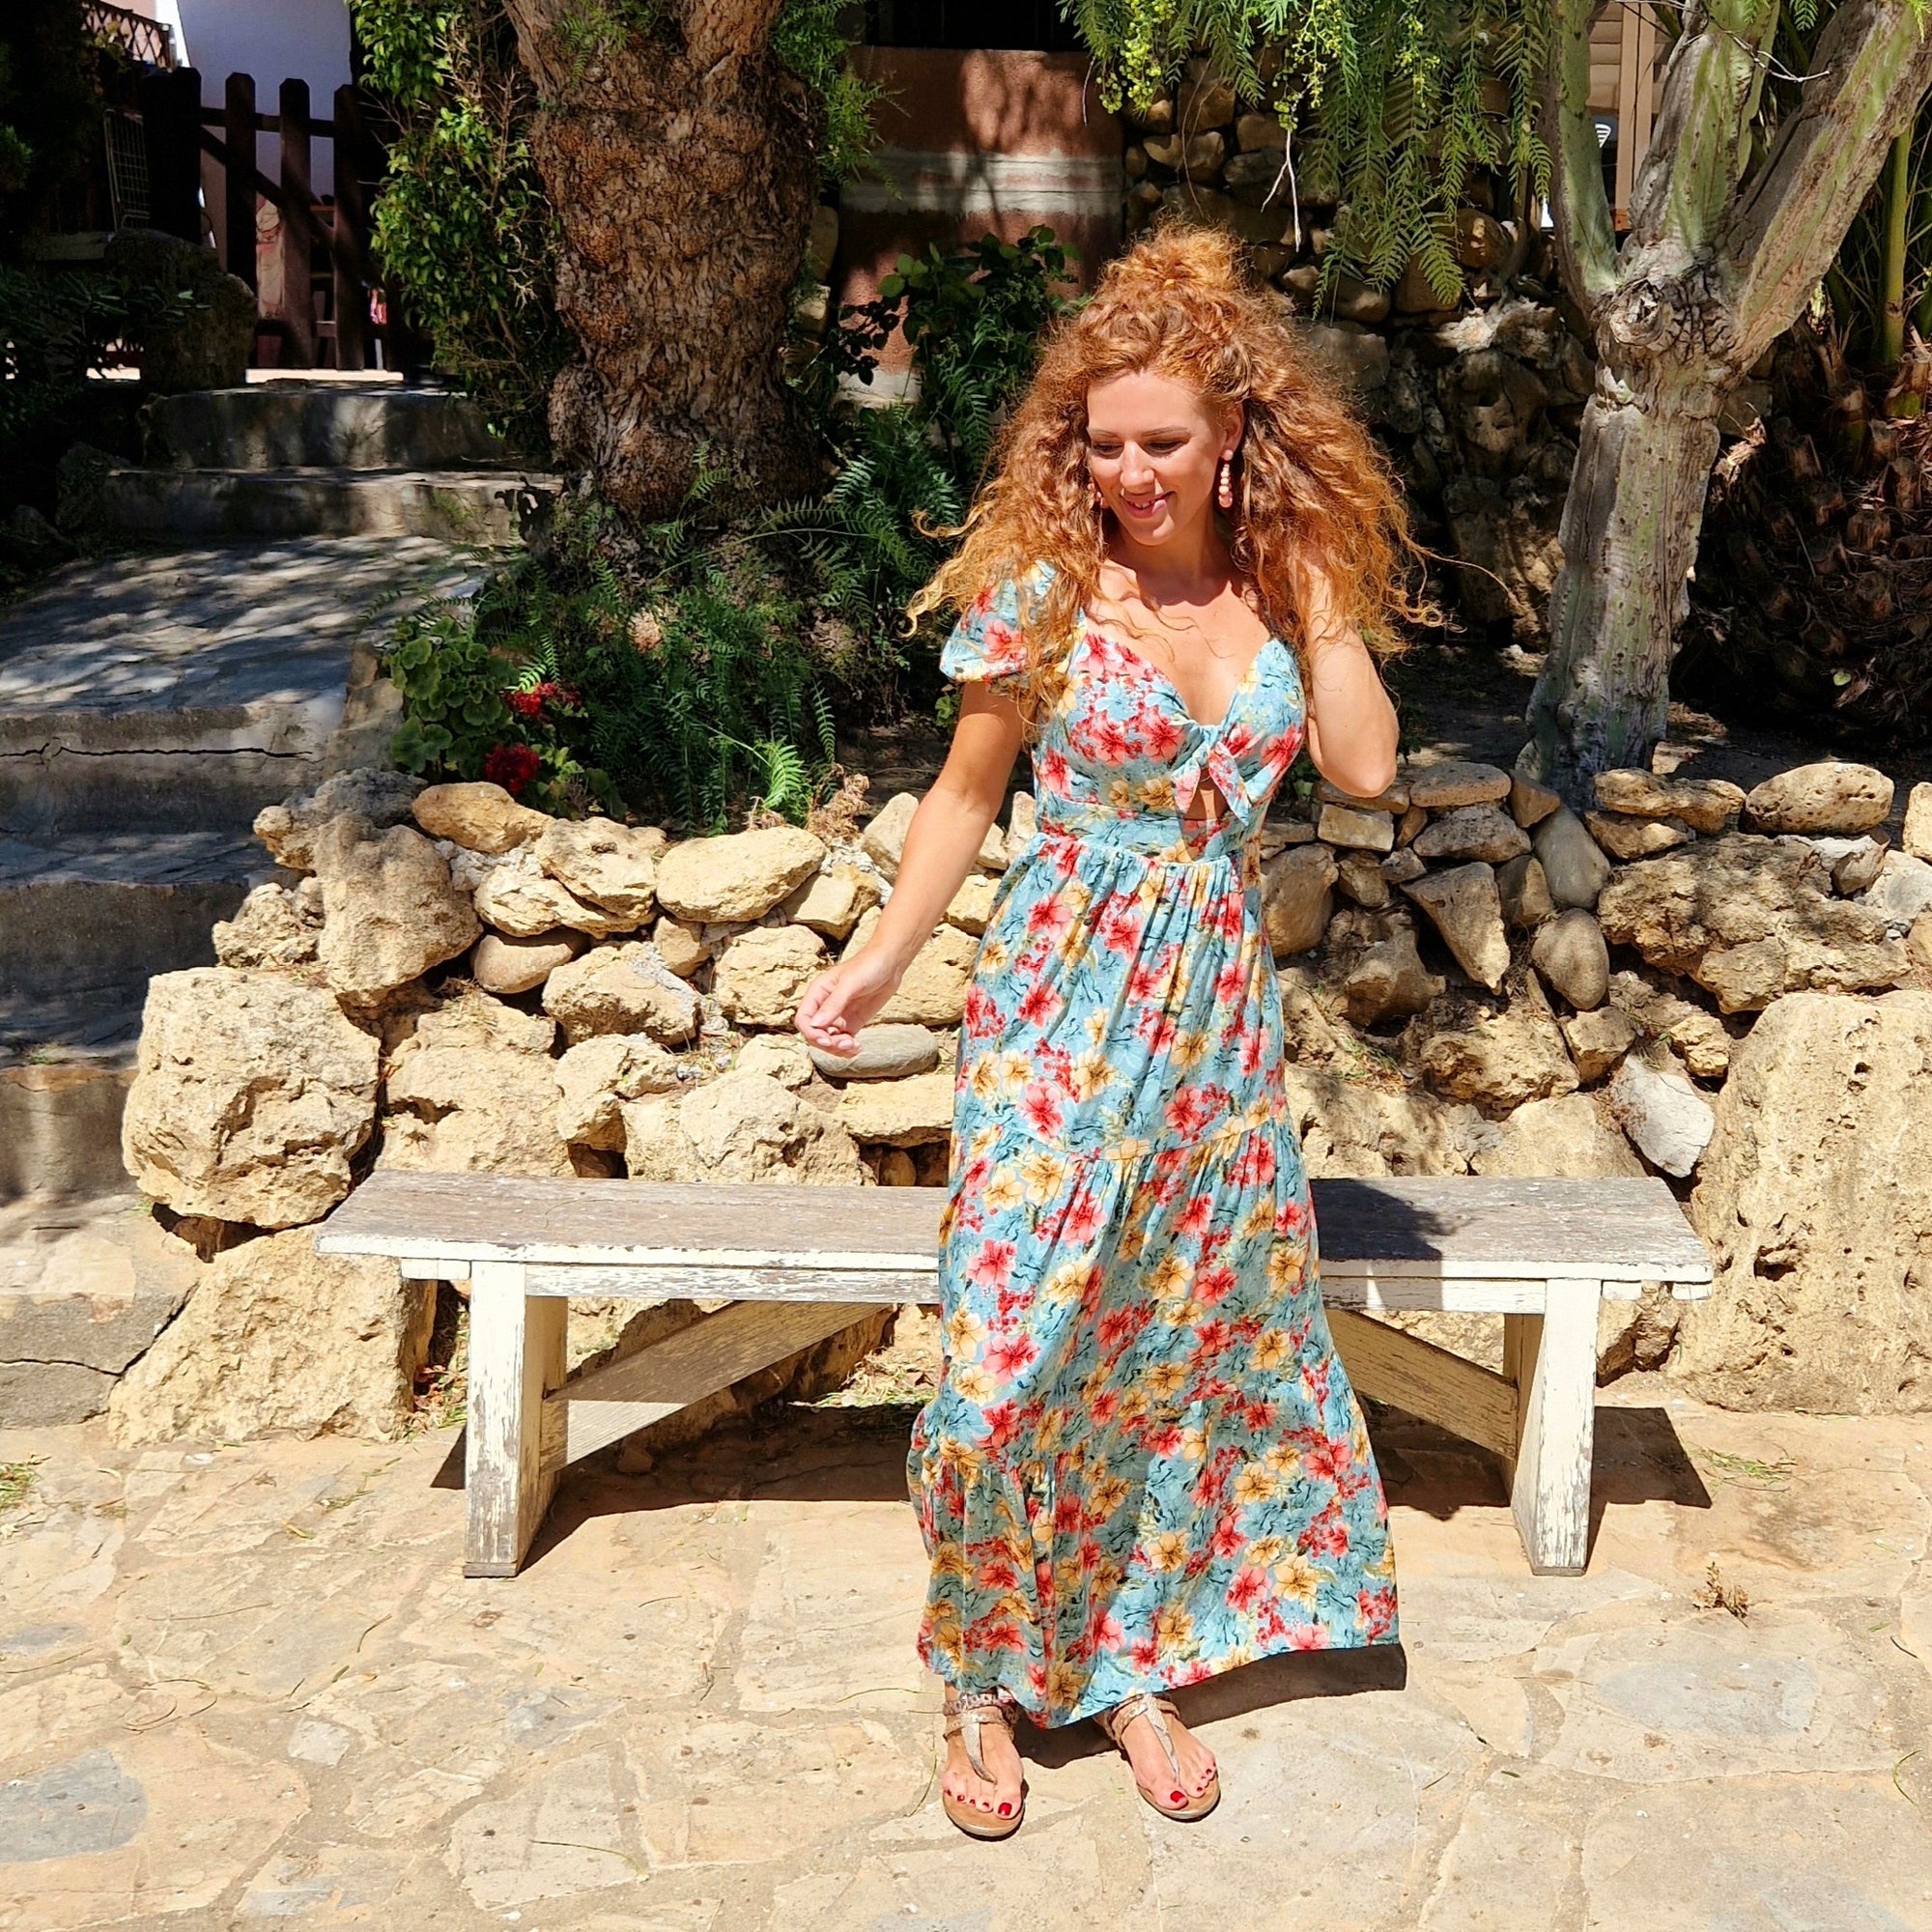 Consequent Veranderlijk inhoud Lilee turquoise Flower Power dress - FAZENNA by Candice